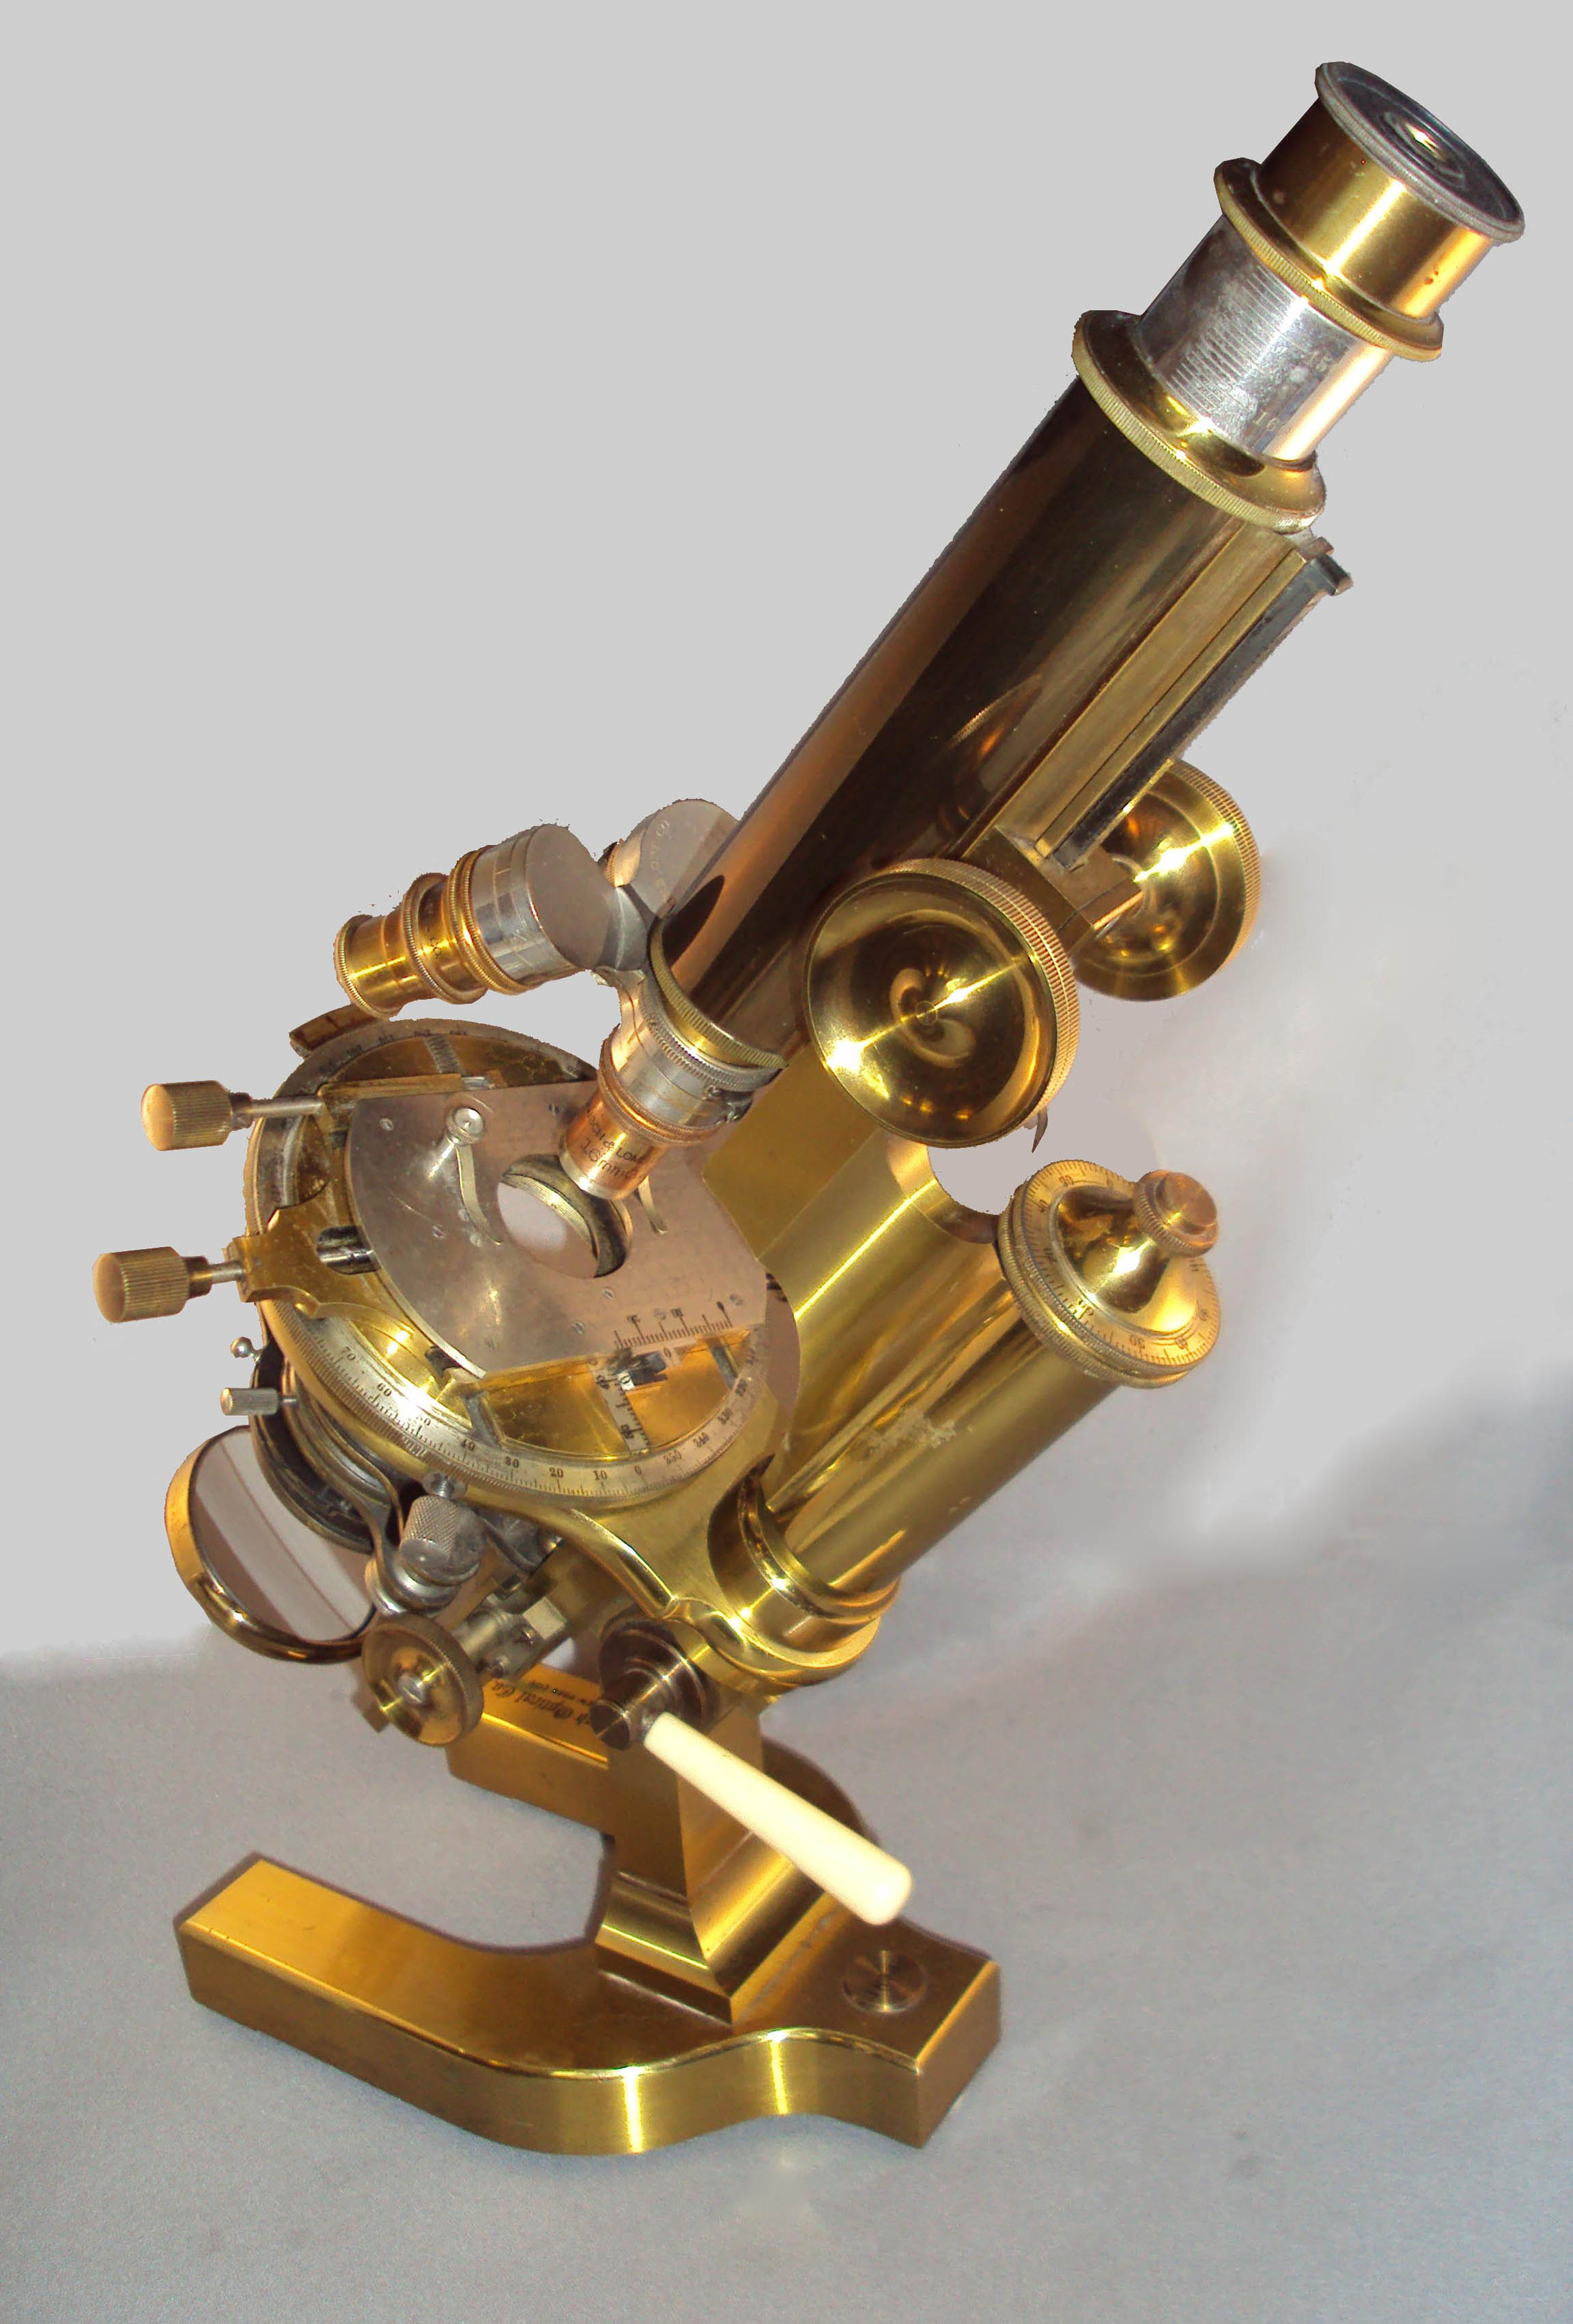 CCDS Microscope